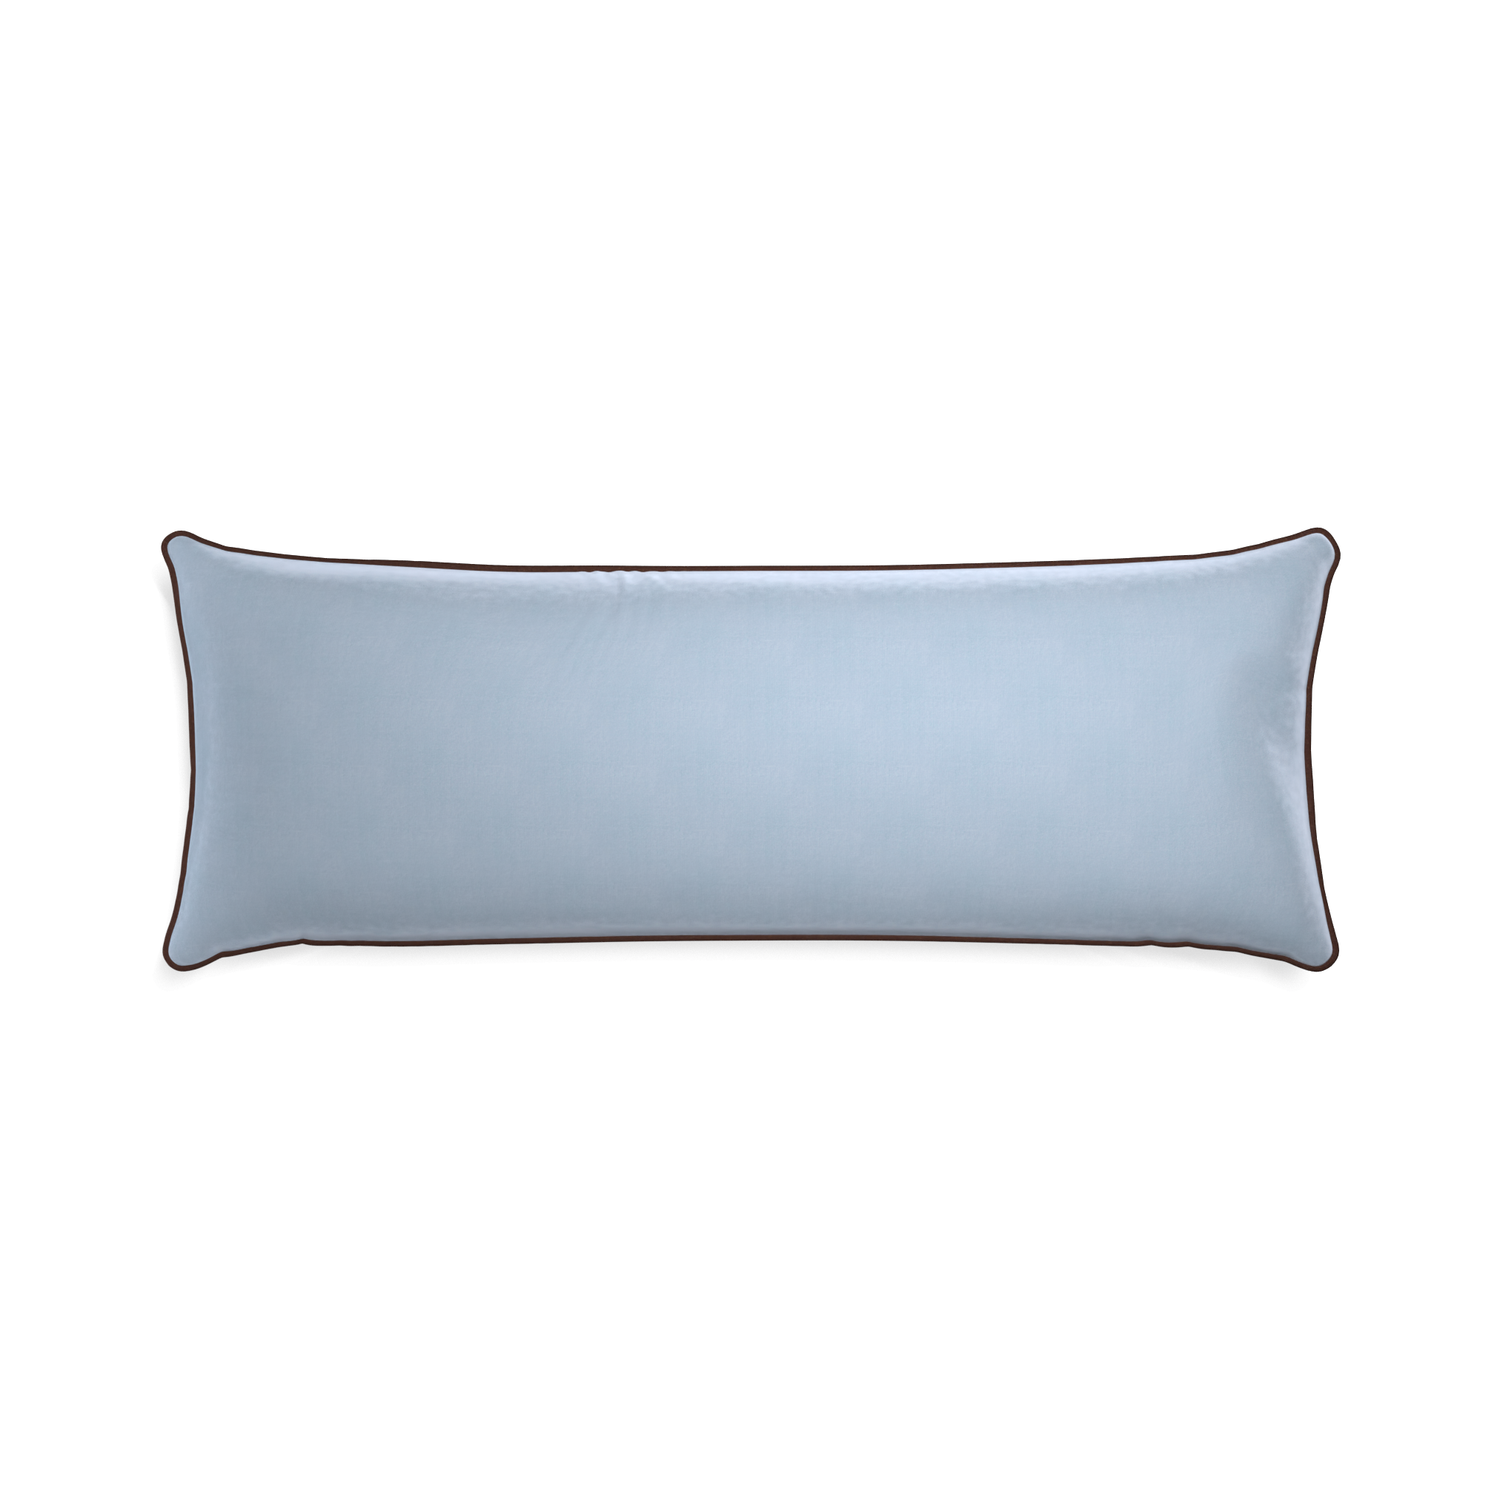 Xl-lumbar sky velvet custom pillow with w piping on white background